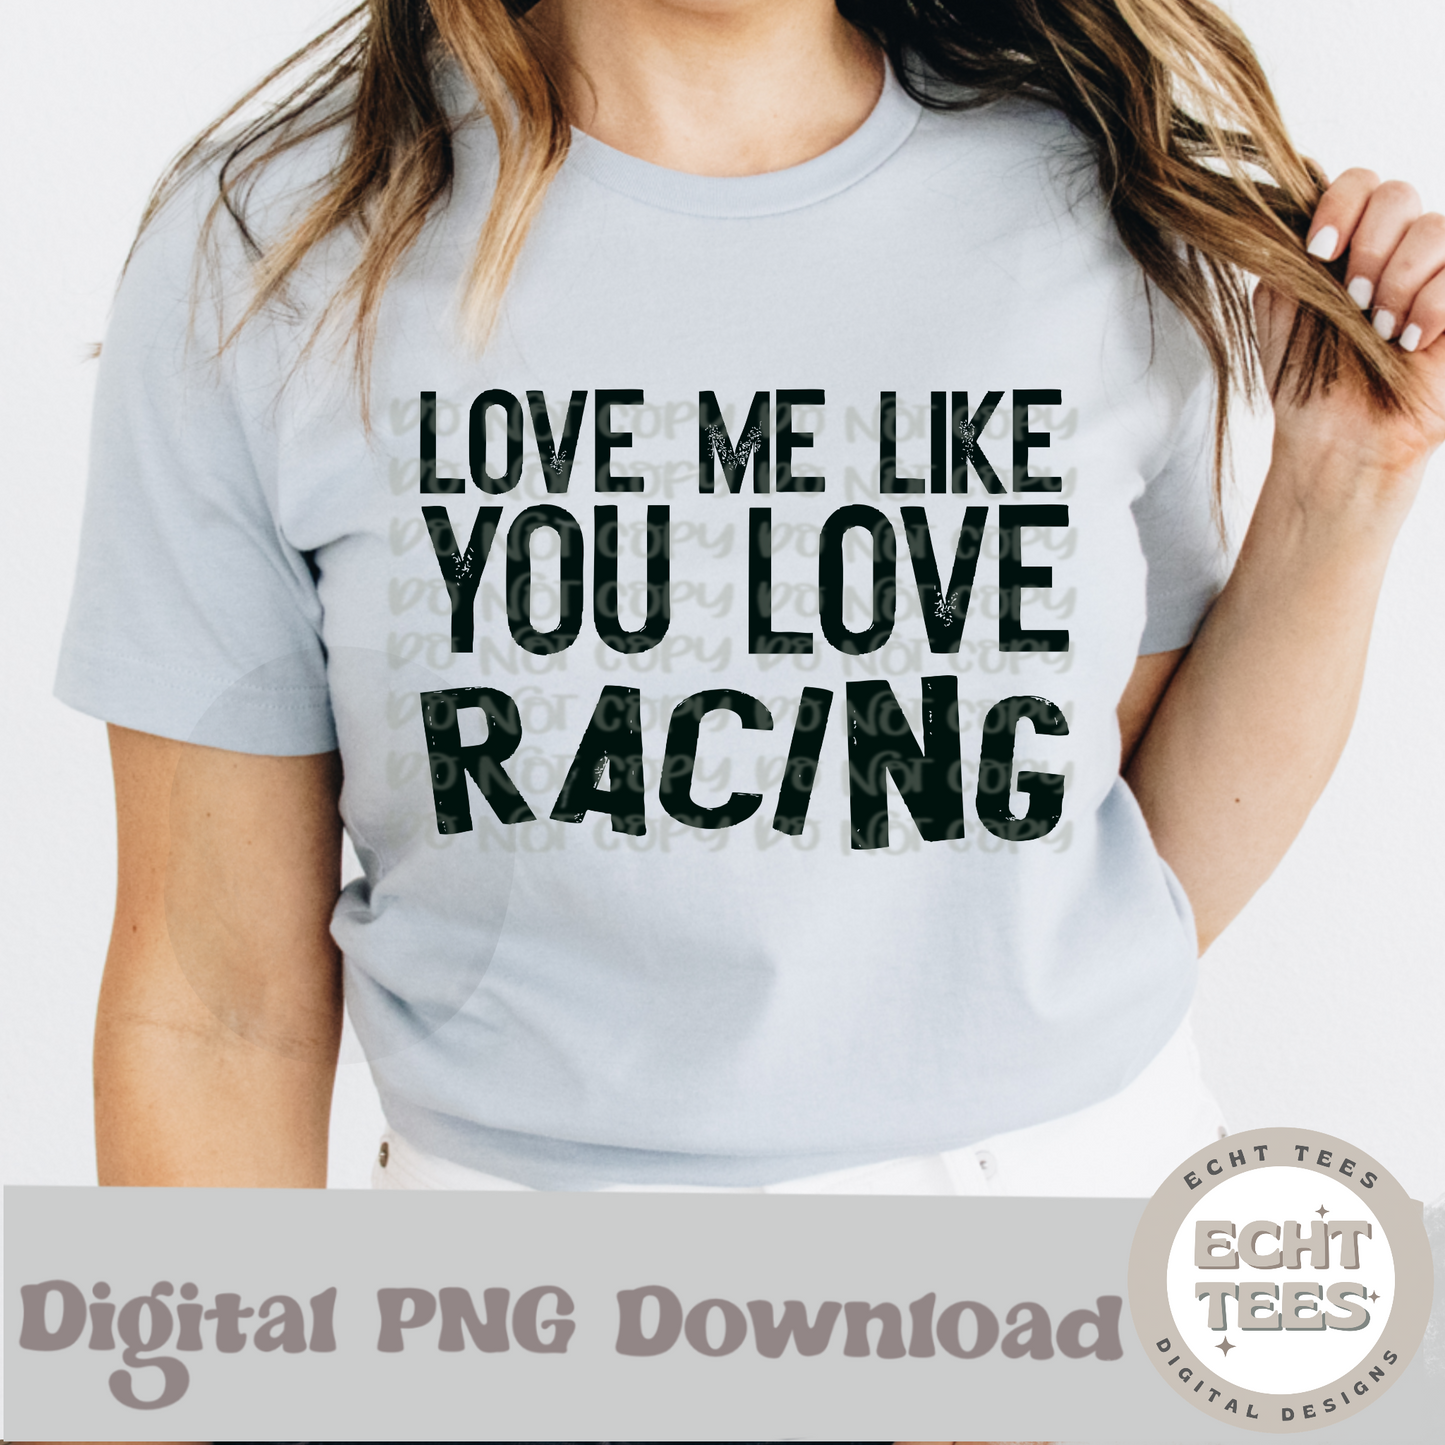 Love me like you love racing PNG Digital Download